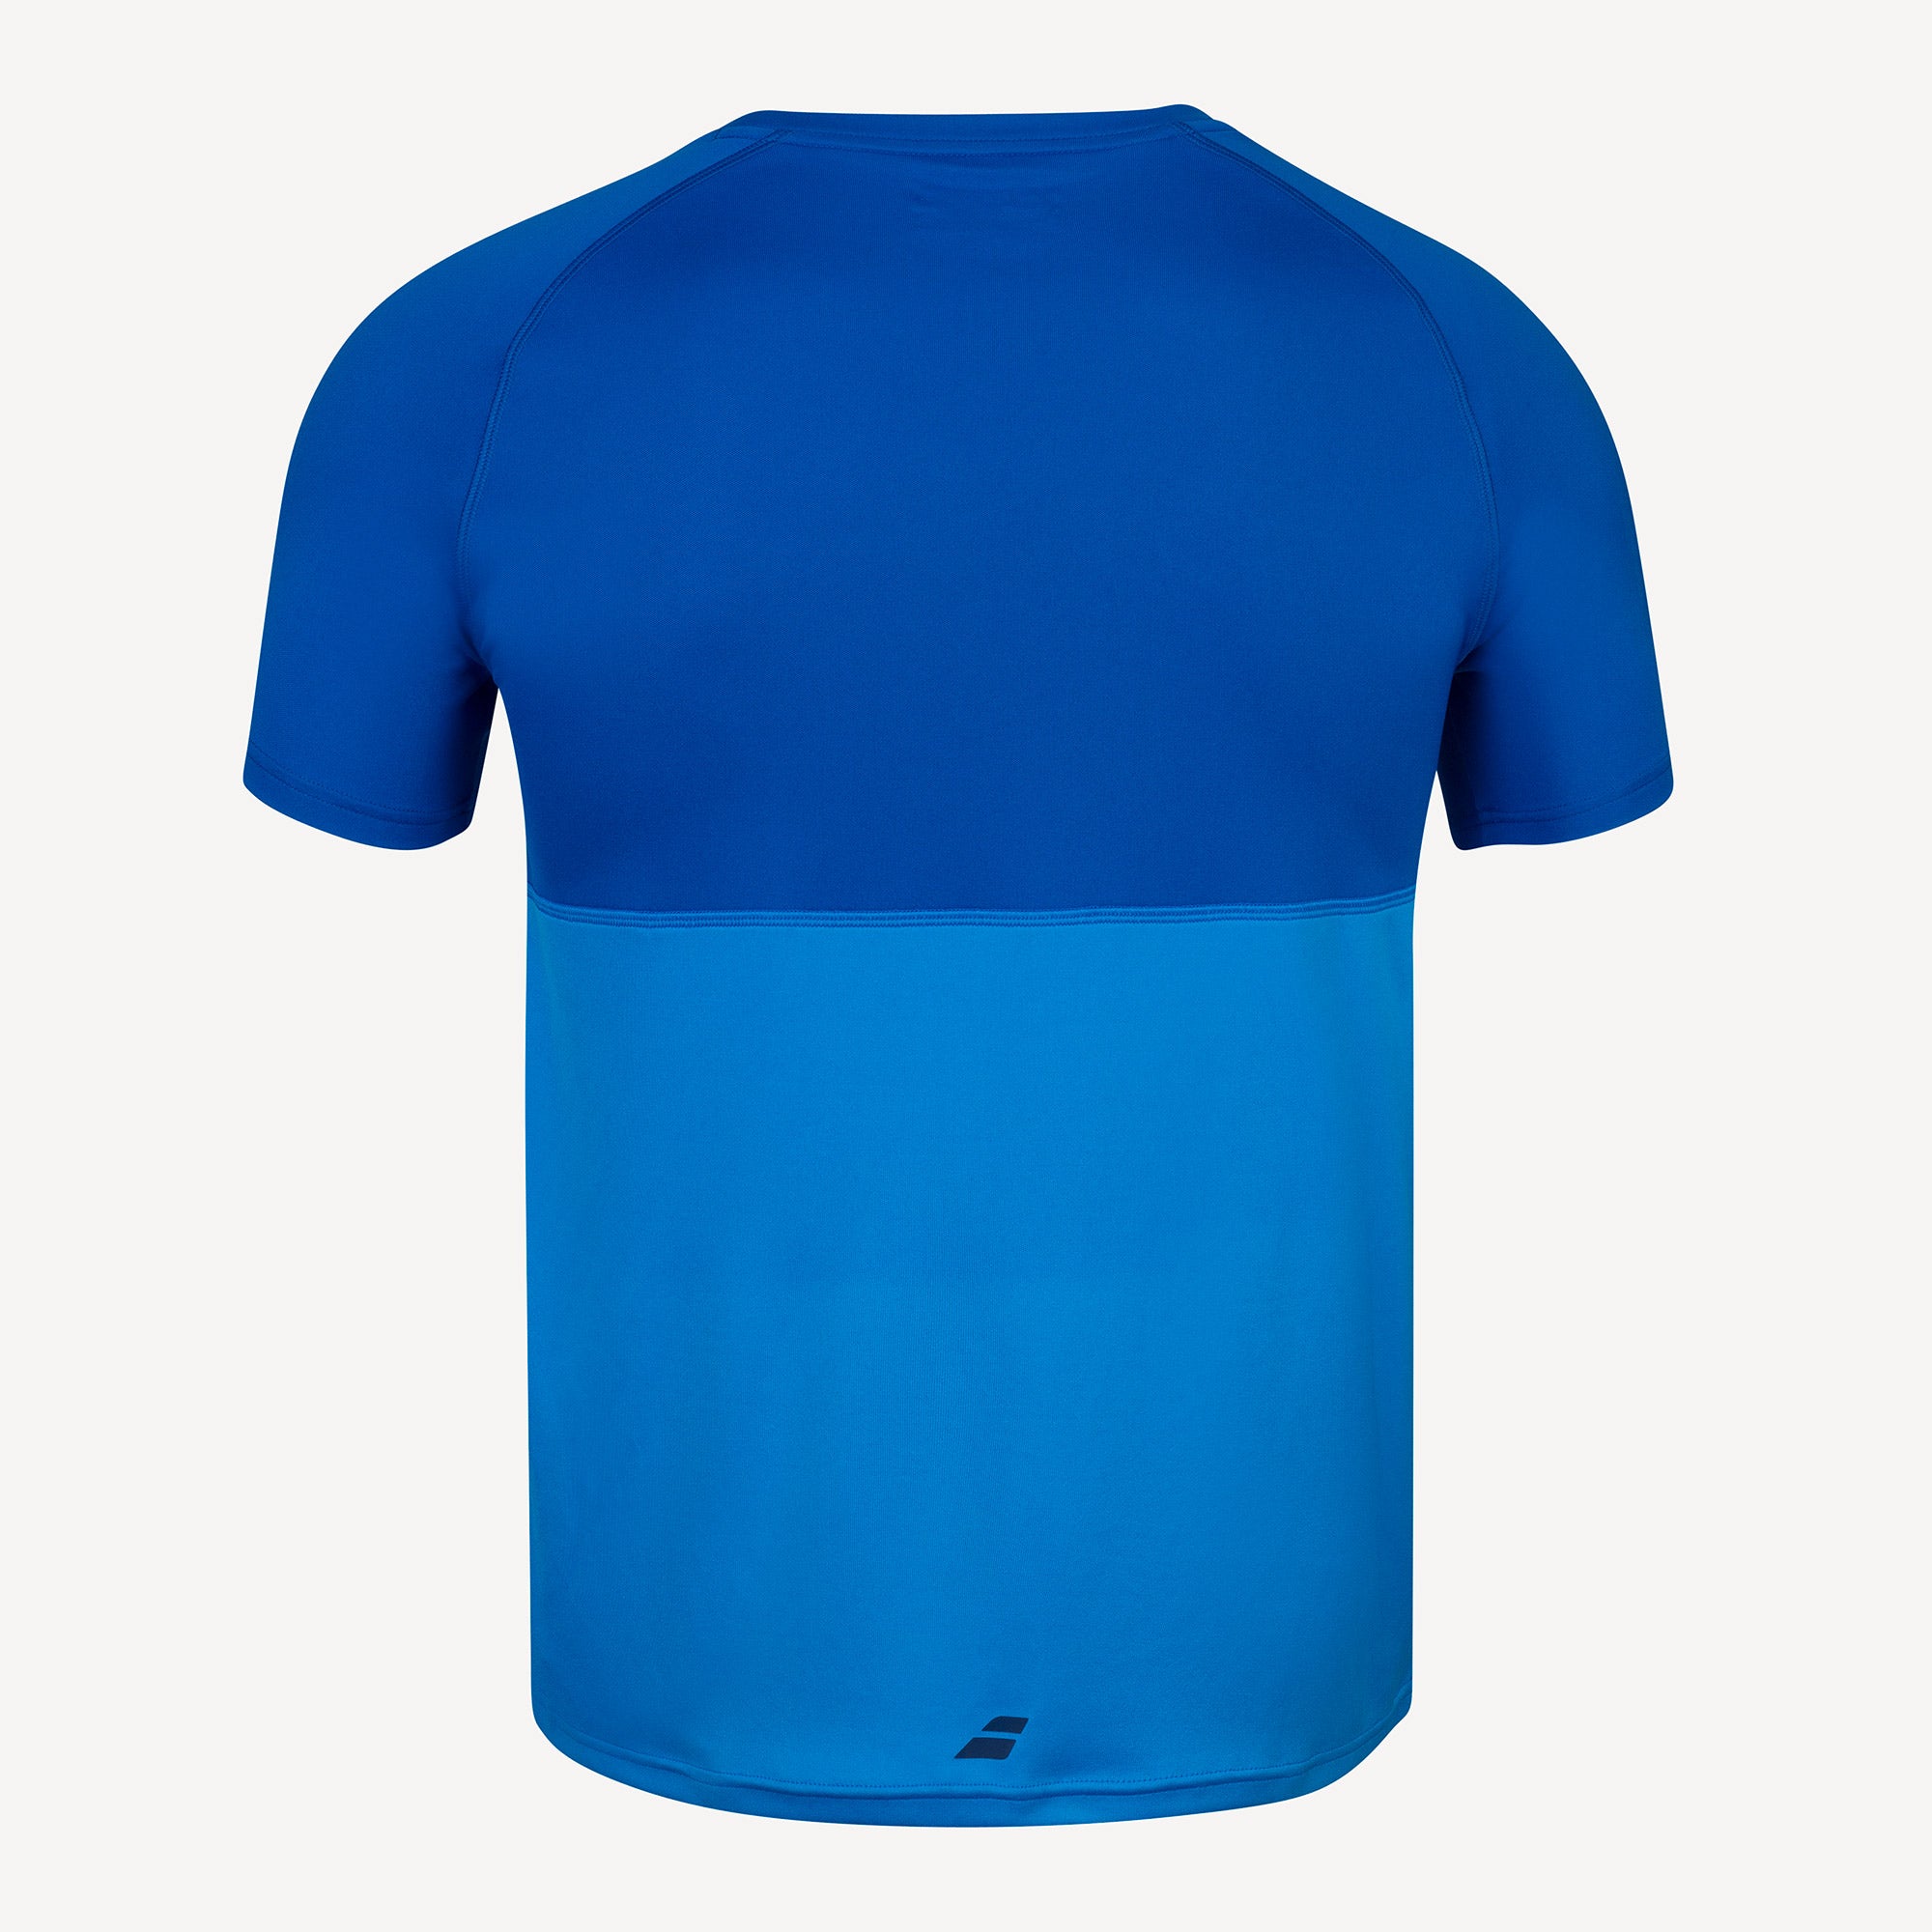 Babolat Play Club Boys' Tennis Shirt Blue (2)